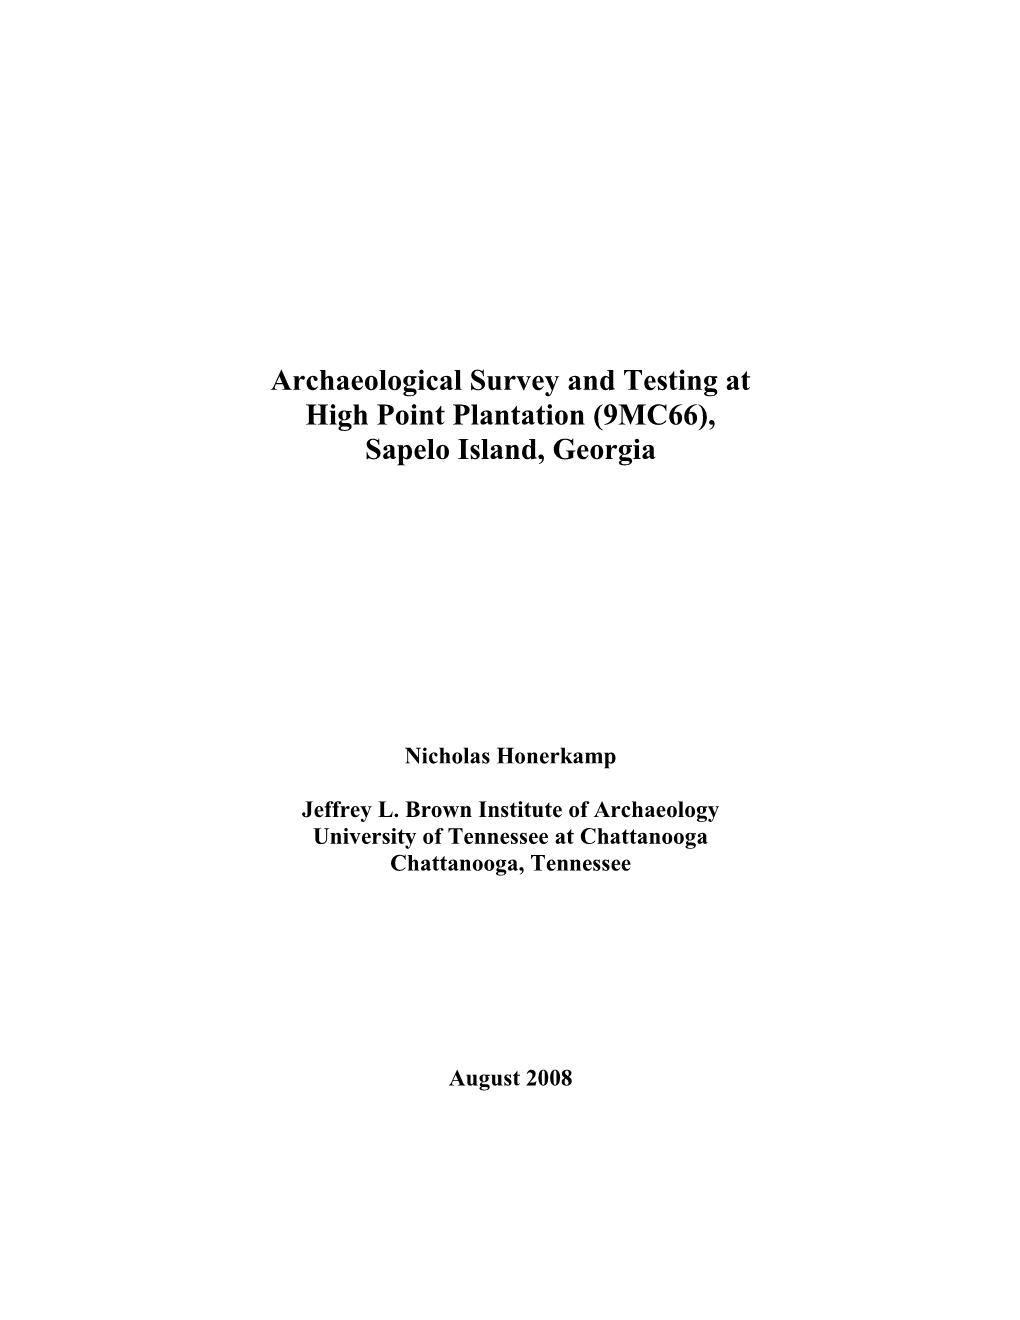 Archaeological Survey and Testing at High Point Plantation (9MC66), Sapelo Island, Georgia